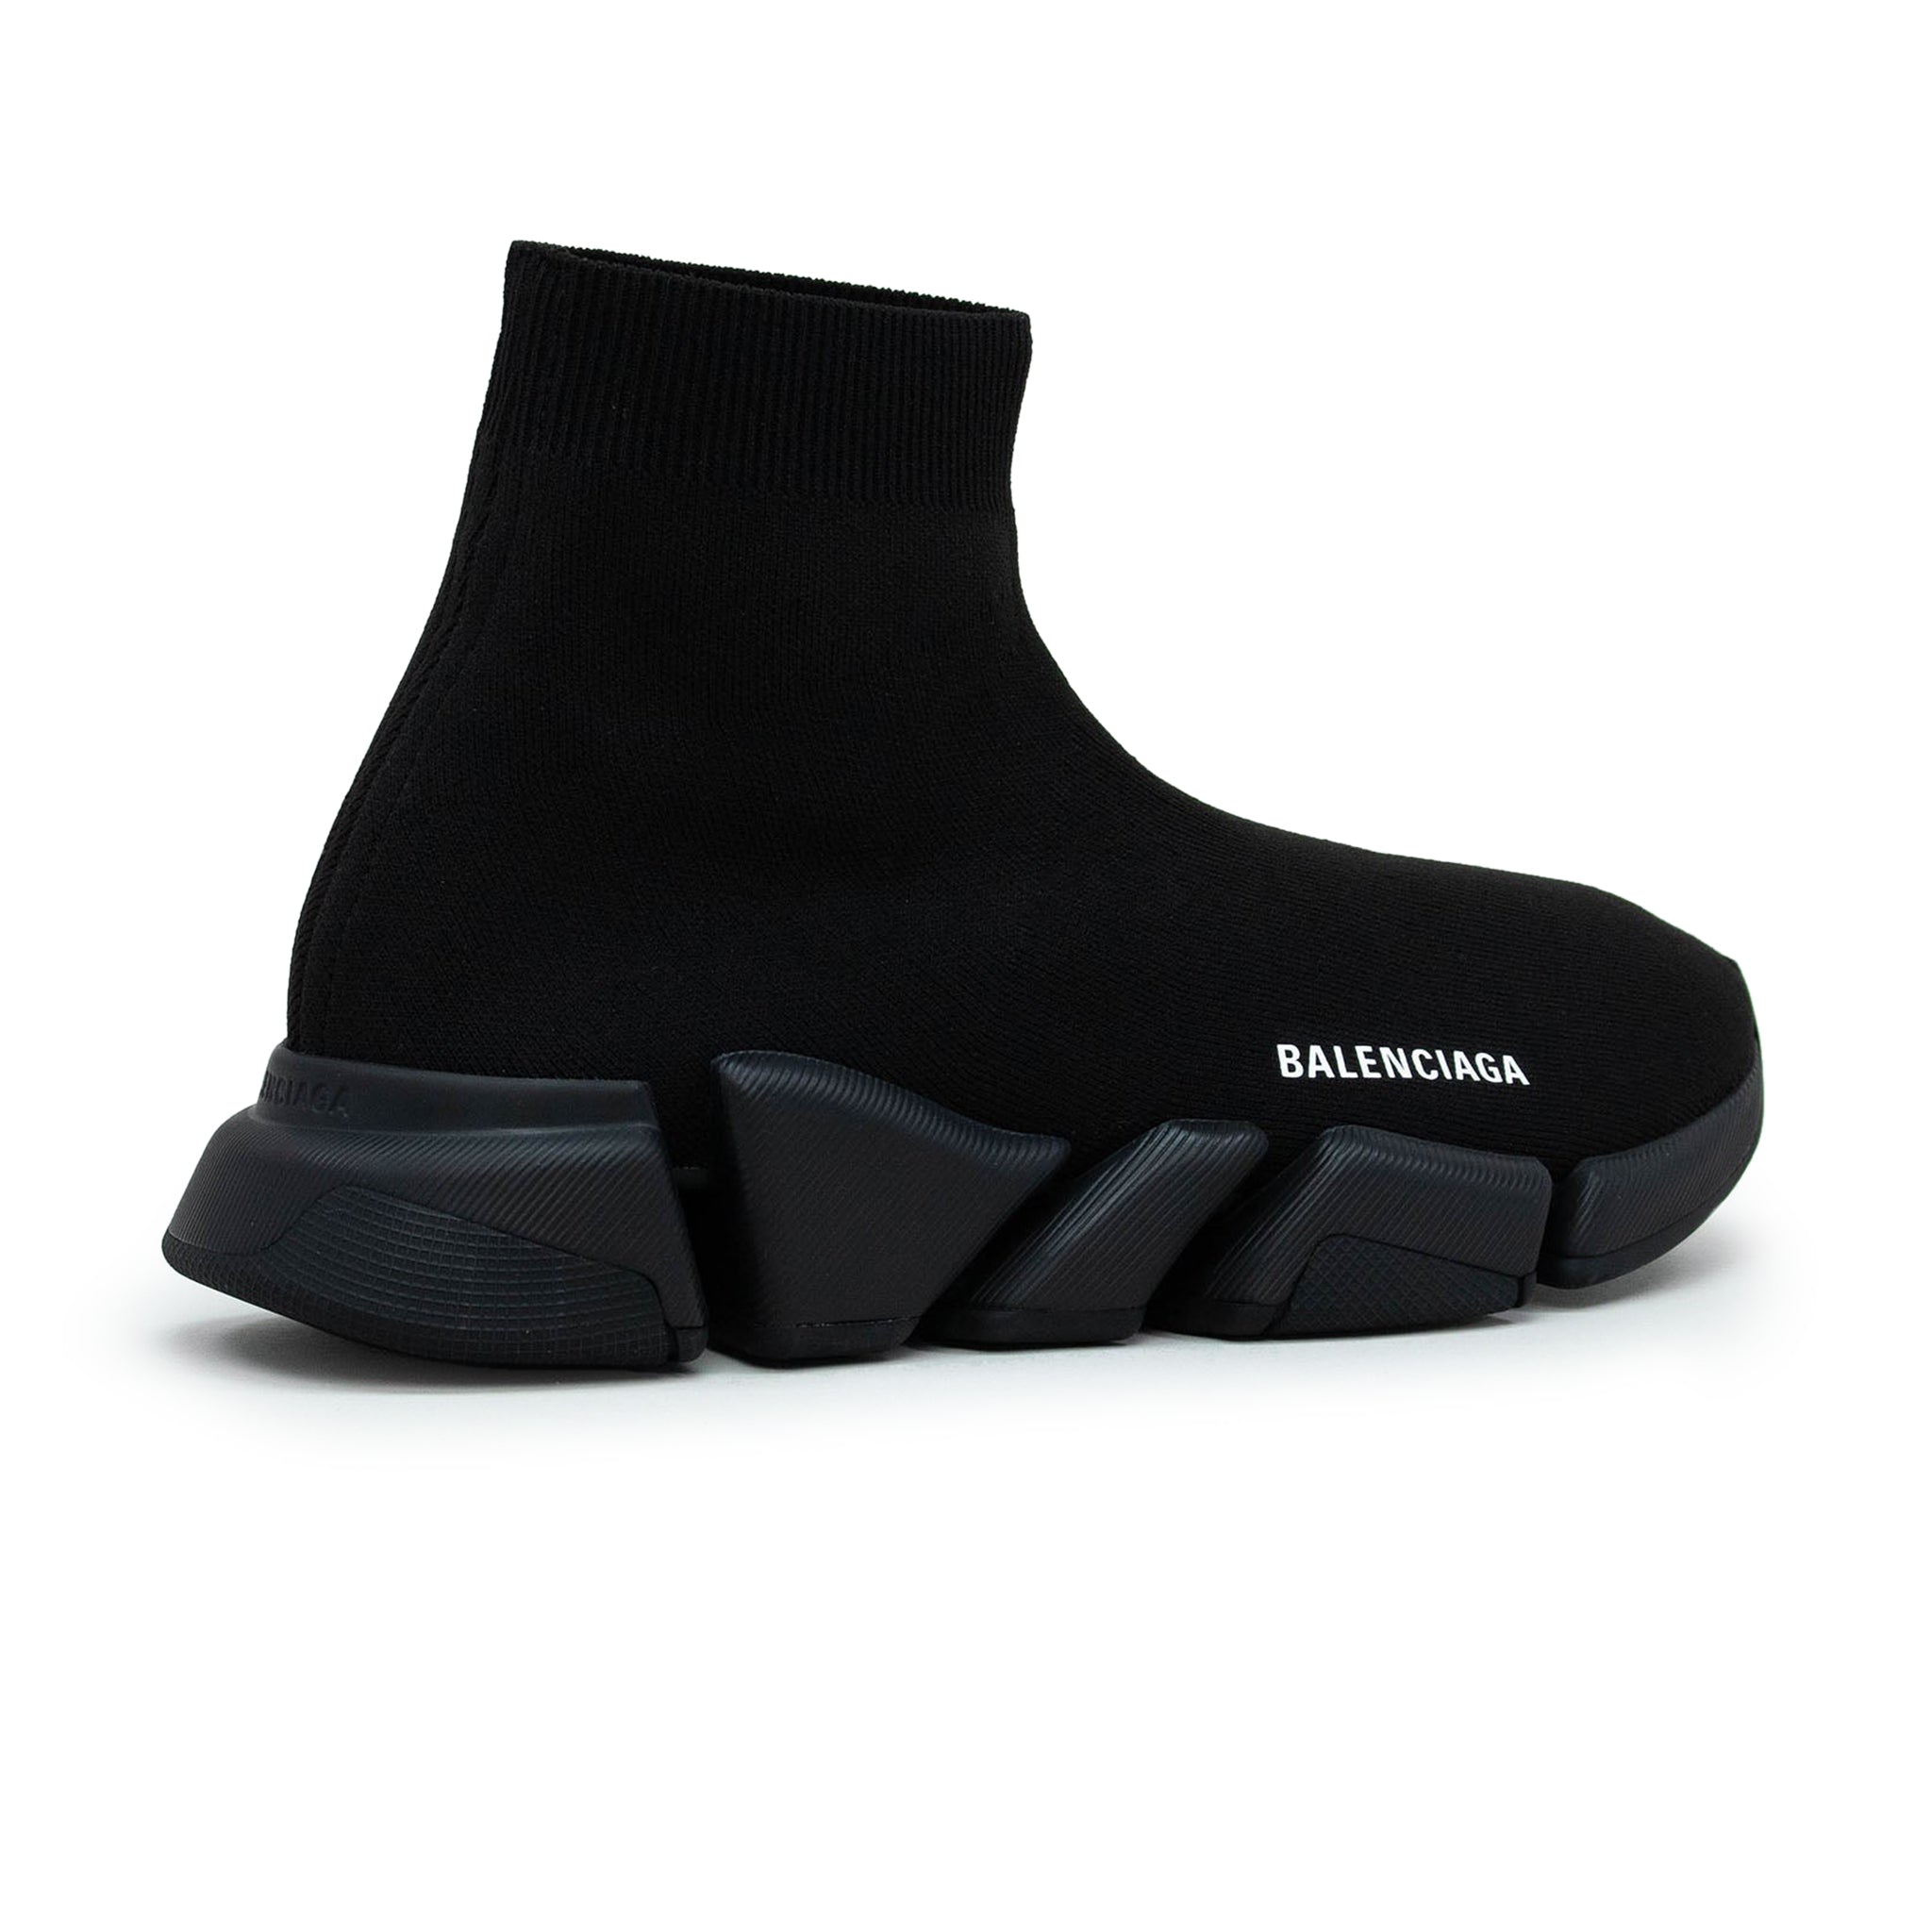 Sneakers KENDALL KYLIE Nikki Blk Wht Blue  InteragencyboardShops  Switzerland  Speed 20 LT sock sneakers Balenciaga